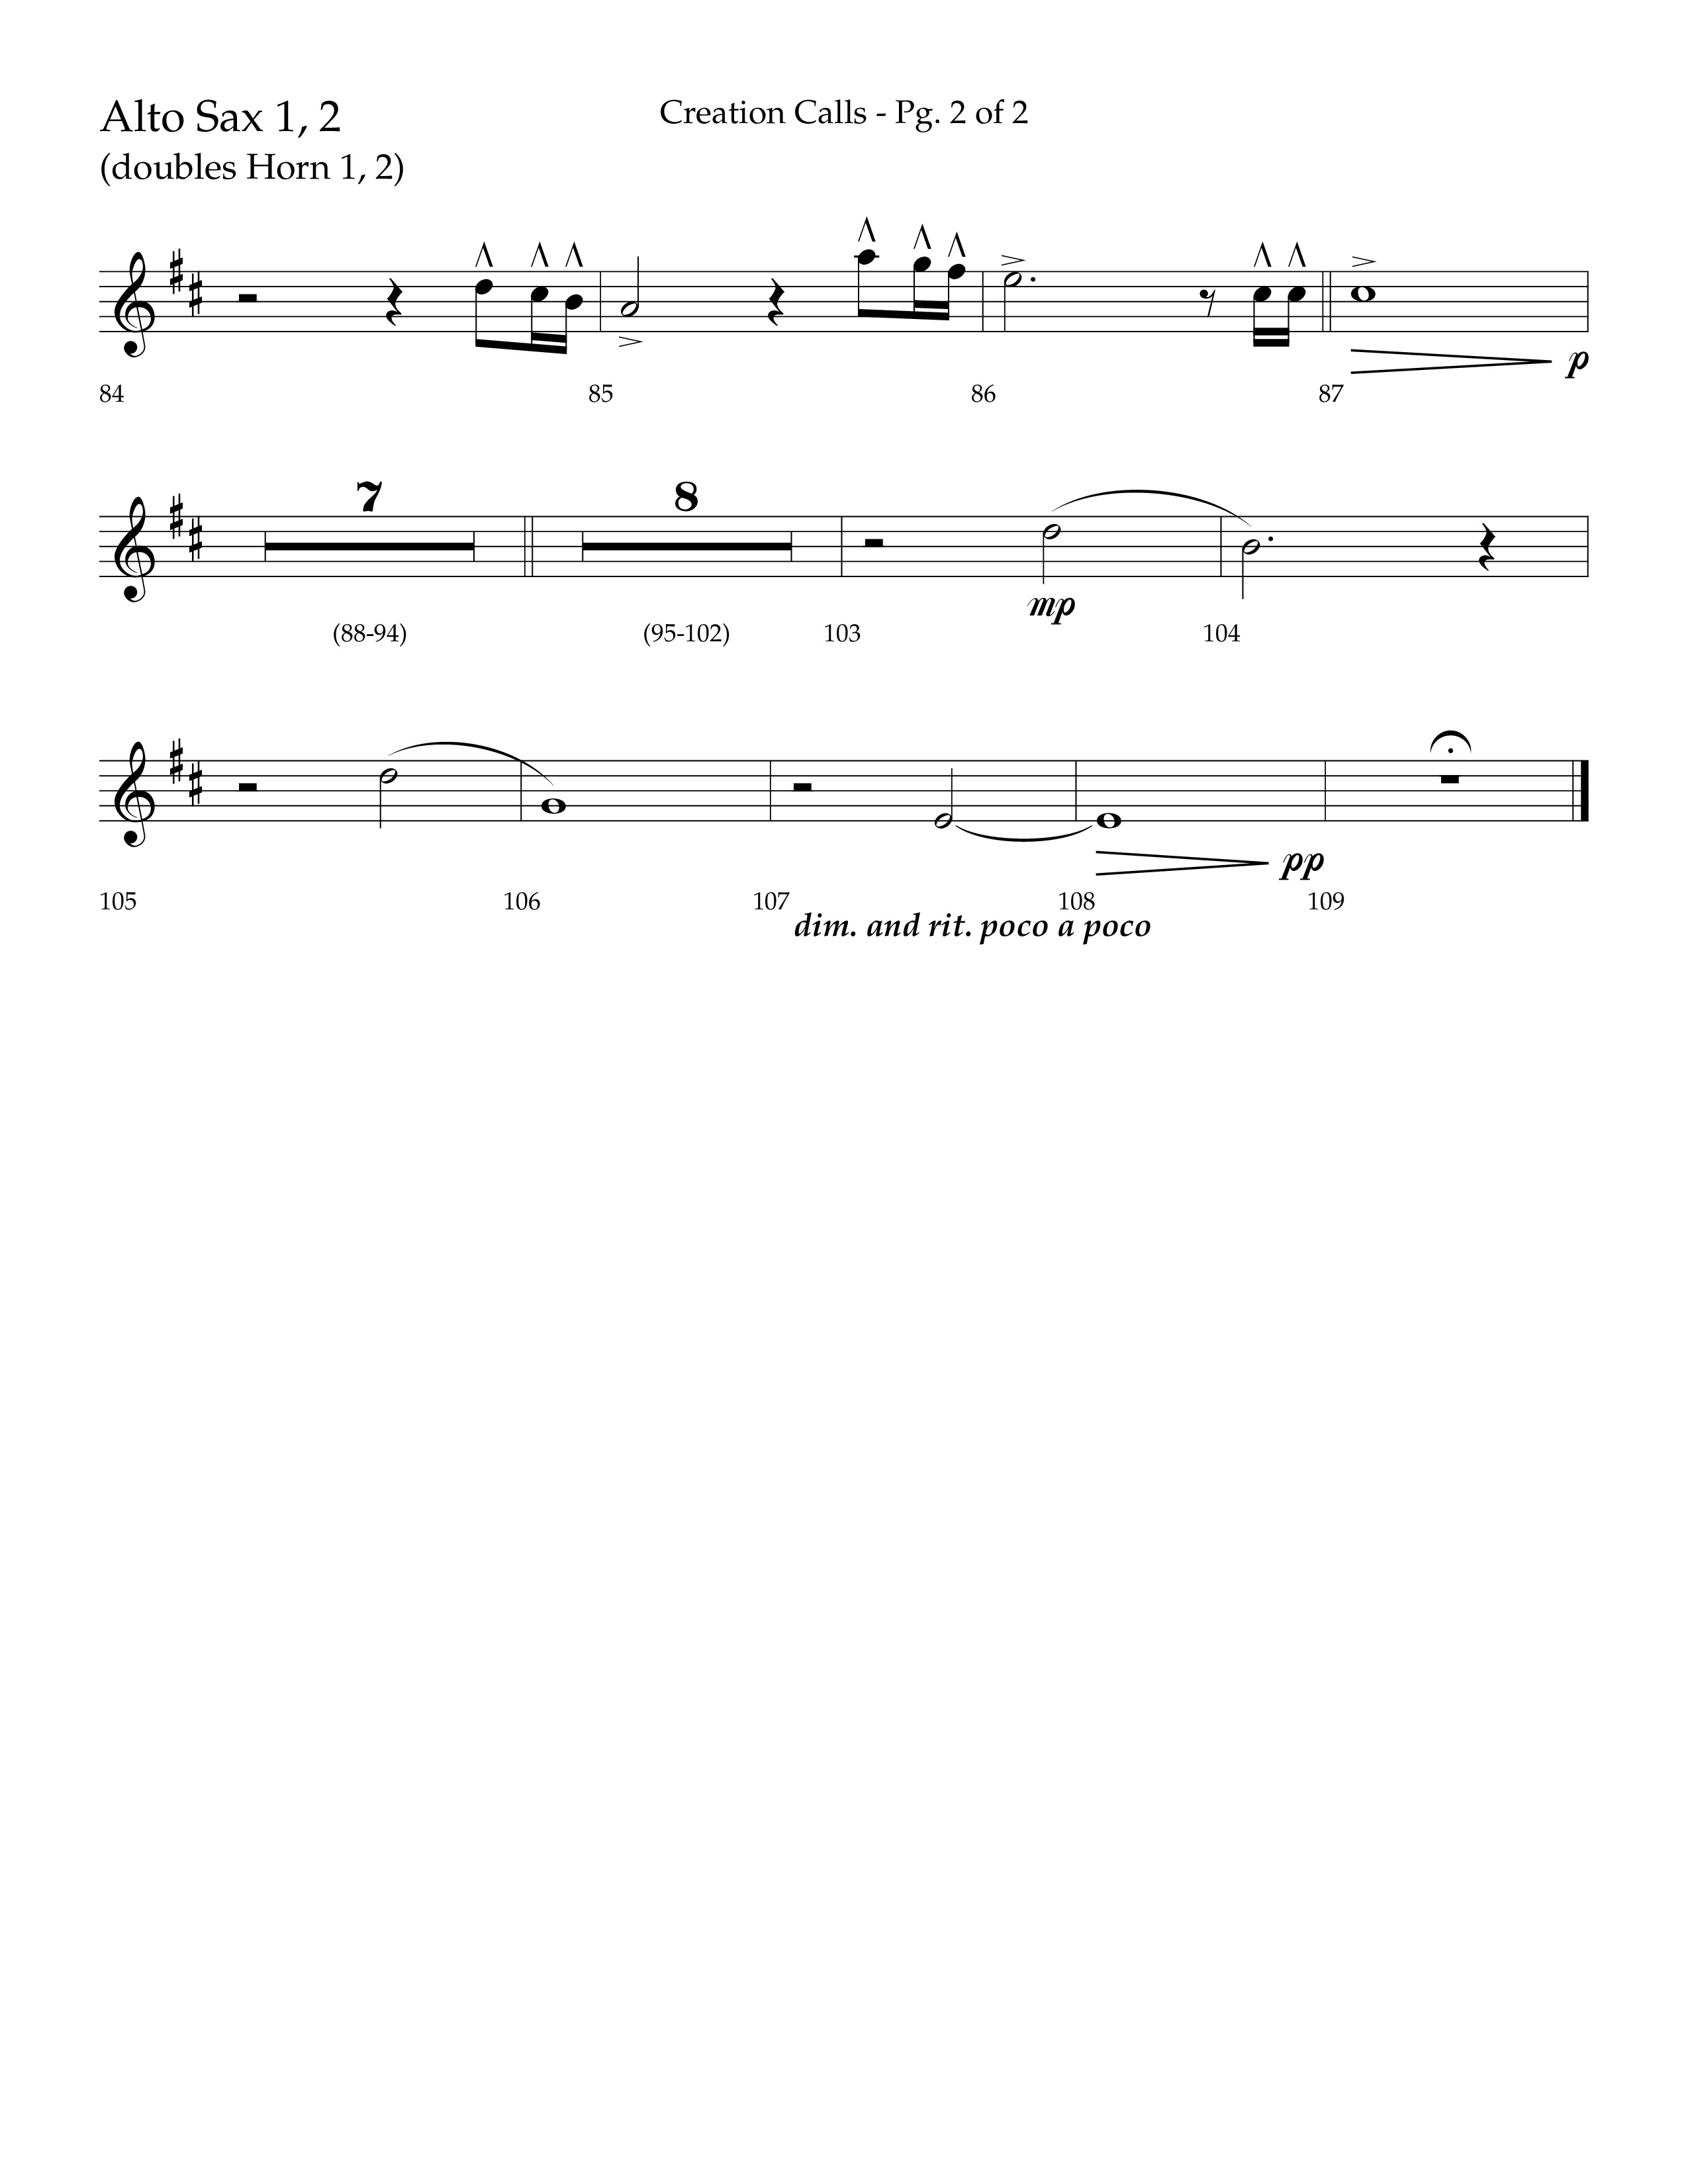 Creation Calls (Choral Anthem SATB) Alto Sax 1/2 (Lifeway Choral / Arr. Ken Barker / Orch. Craig Adams)